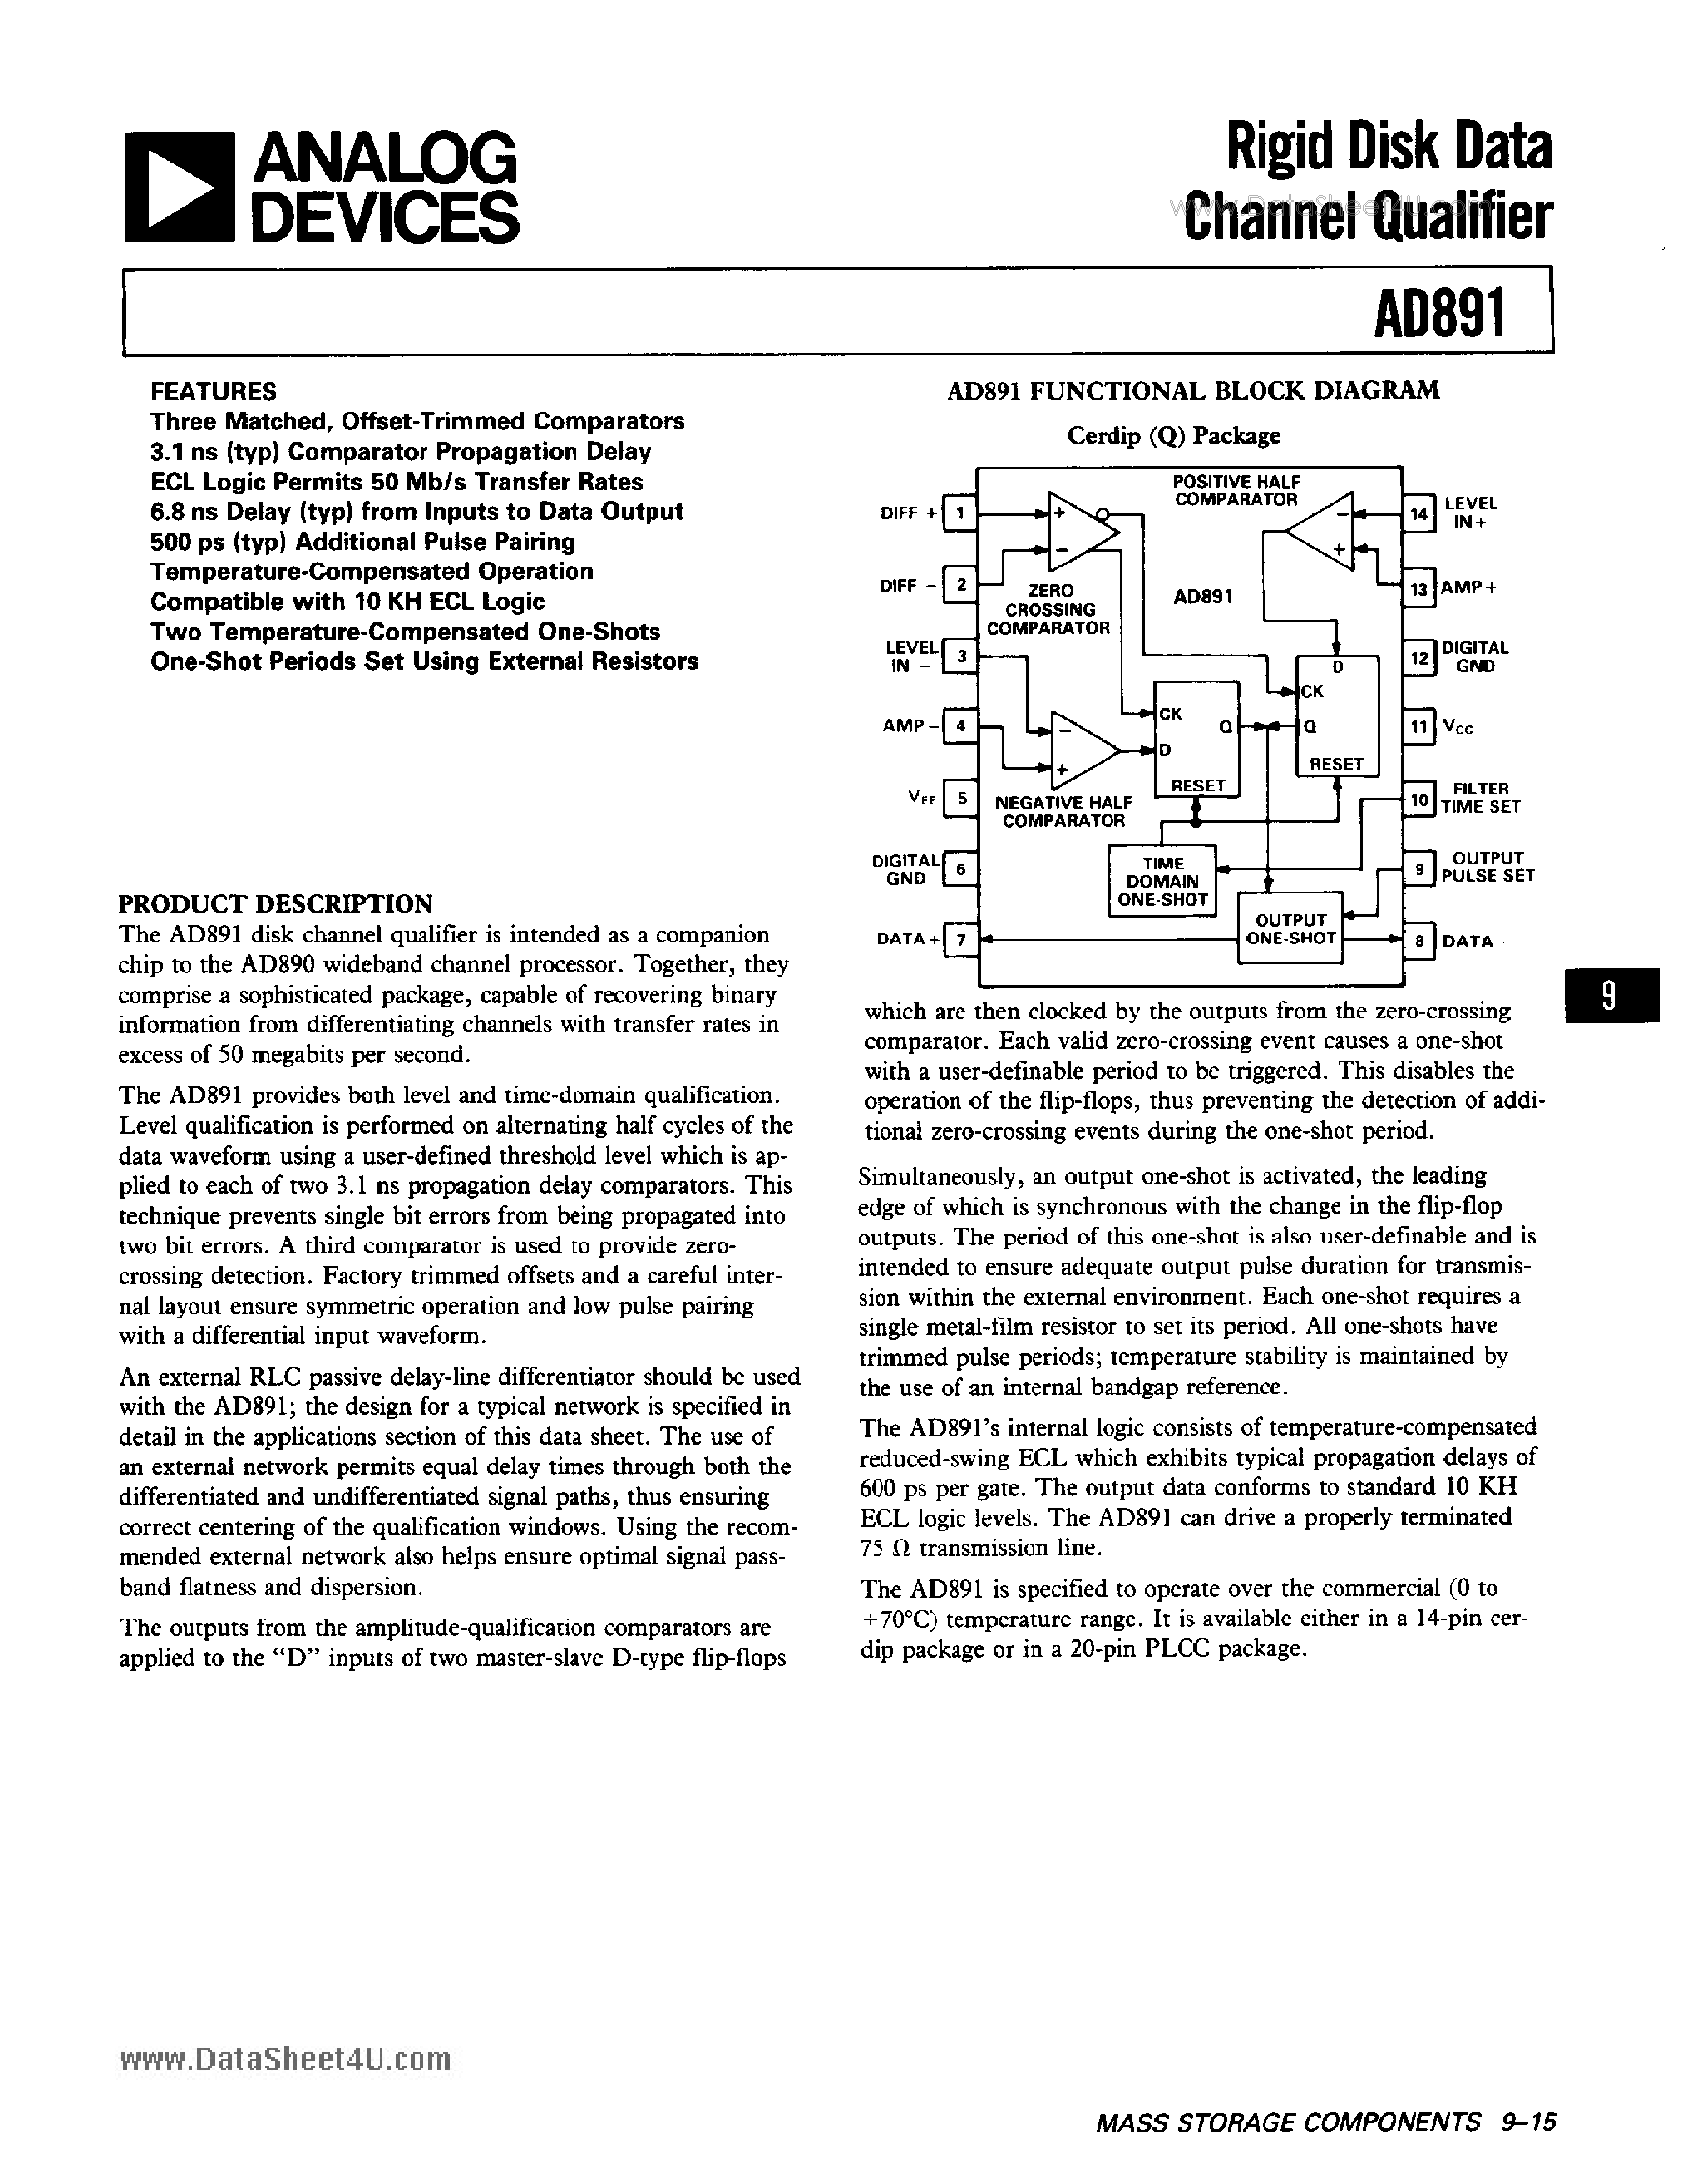 Datasheet AD891 - RIGID DISK DATA CHANNEL QUALIFIER page 1